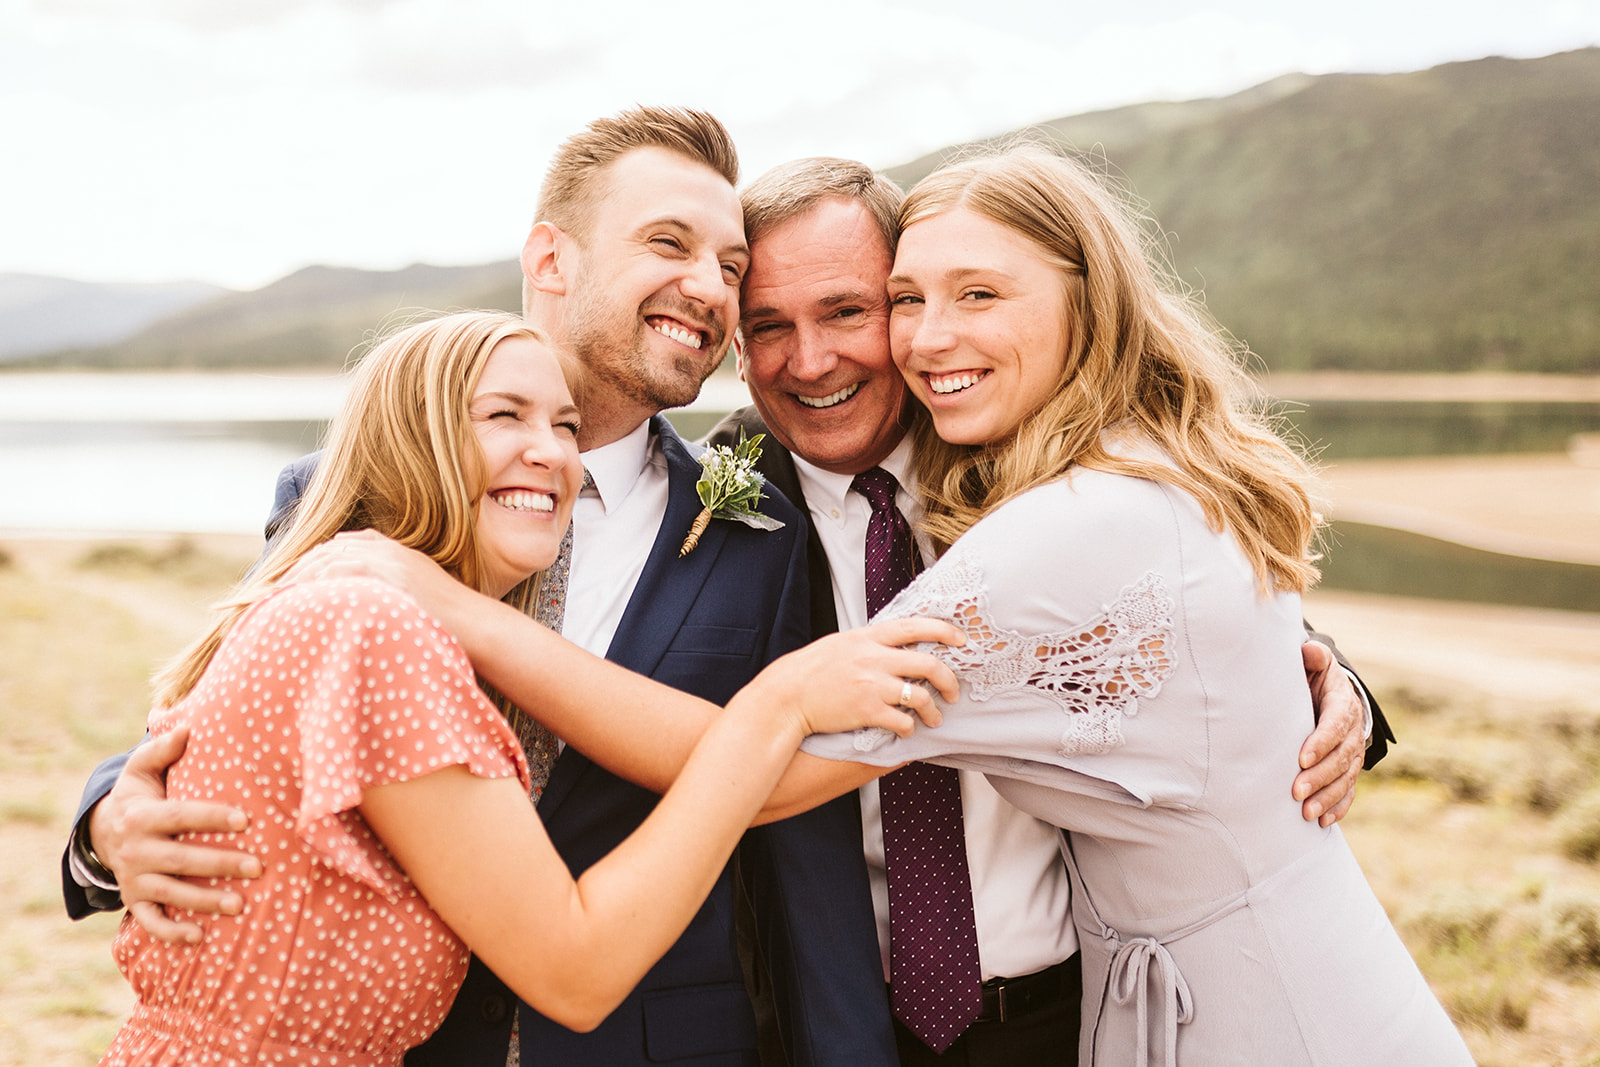 A family embraces for a wedding portrait.